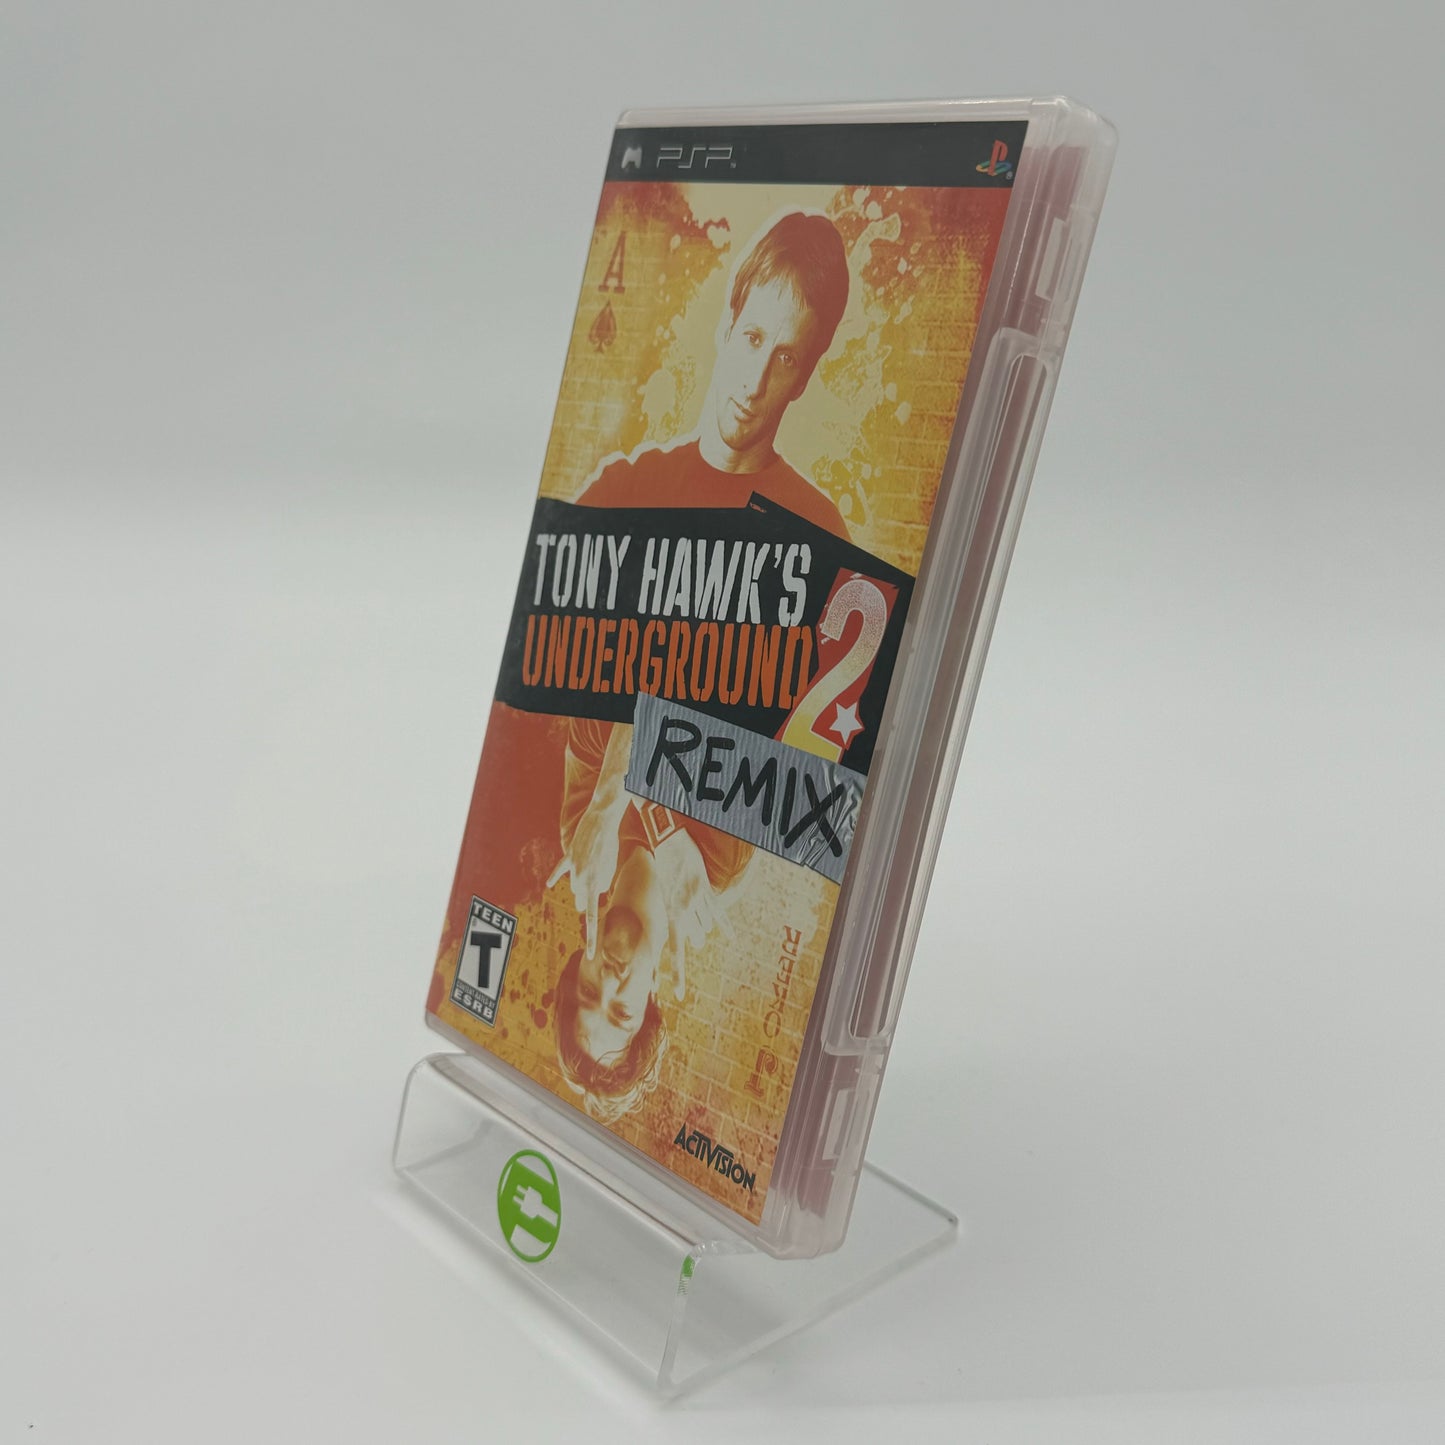 Tony Hawk Underground 2 Remix  (Sony PlayStation Portable PSP,  2005)